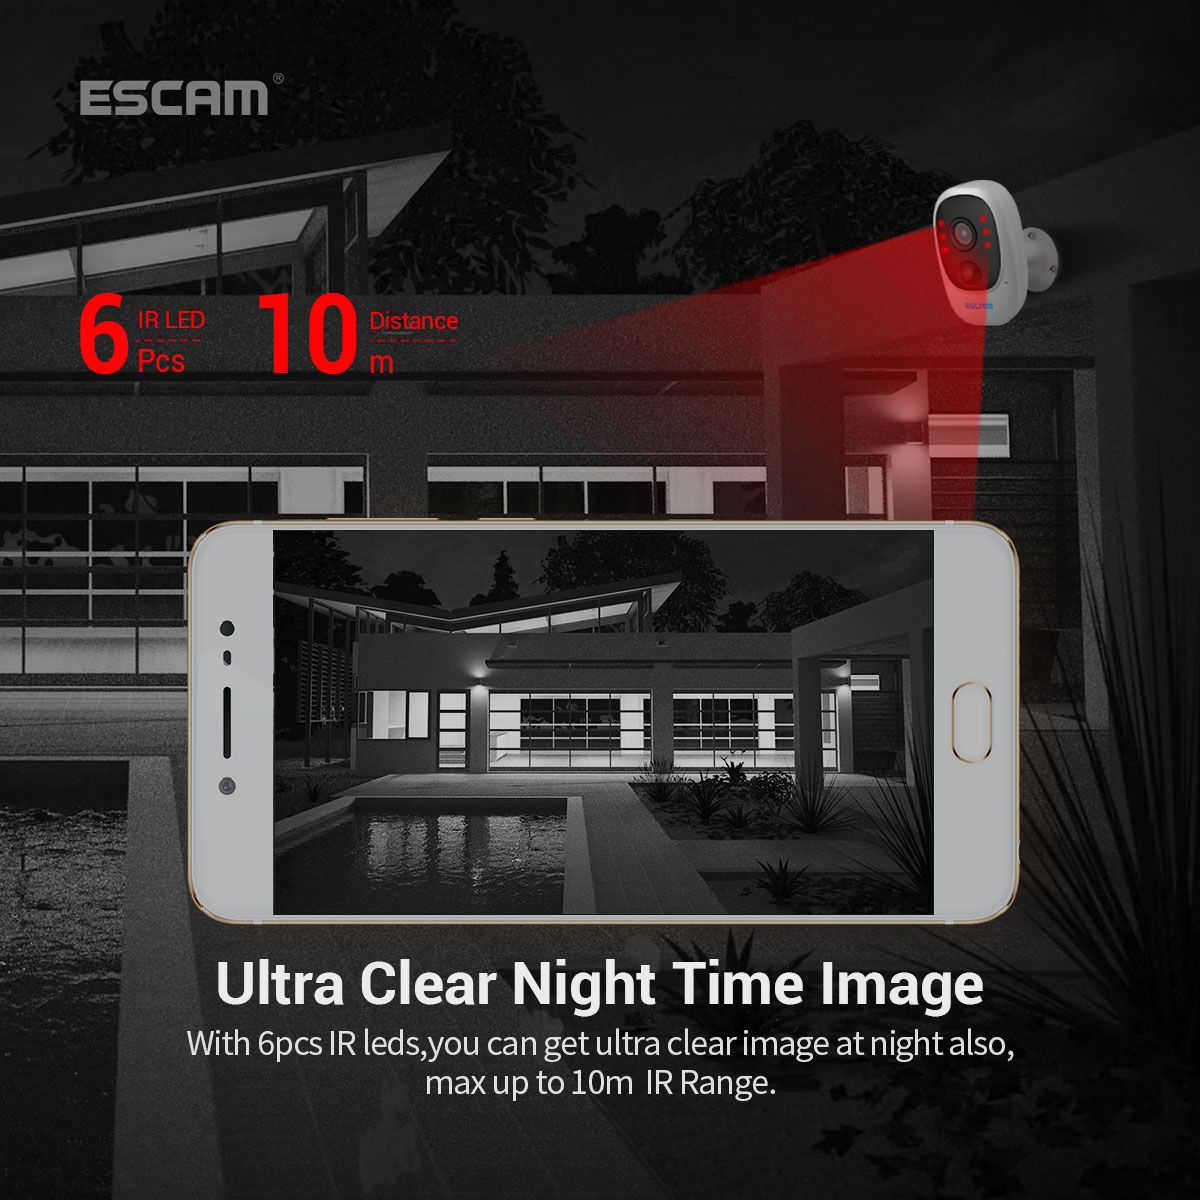 ESCAM-G08-1080P-Wireless-Battery-Rechargeable-PIR-IP-Camera-Solar-Panel-Audio-Card-Cloud-Storage-Sec-1608743